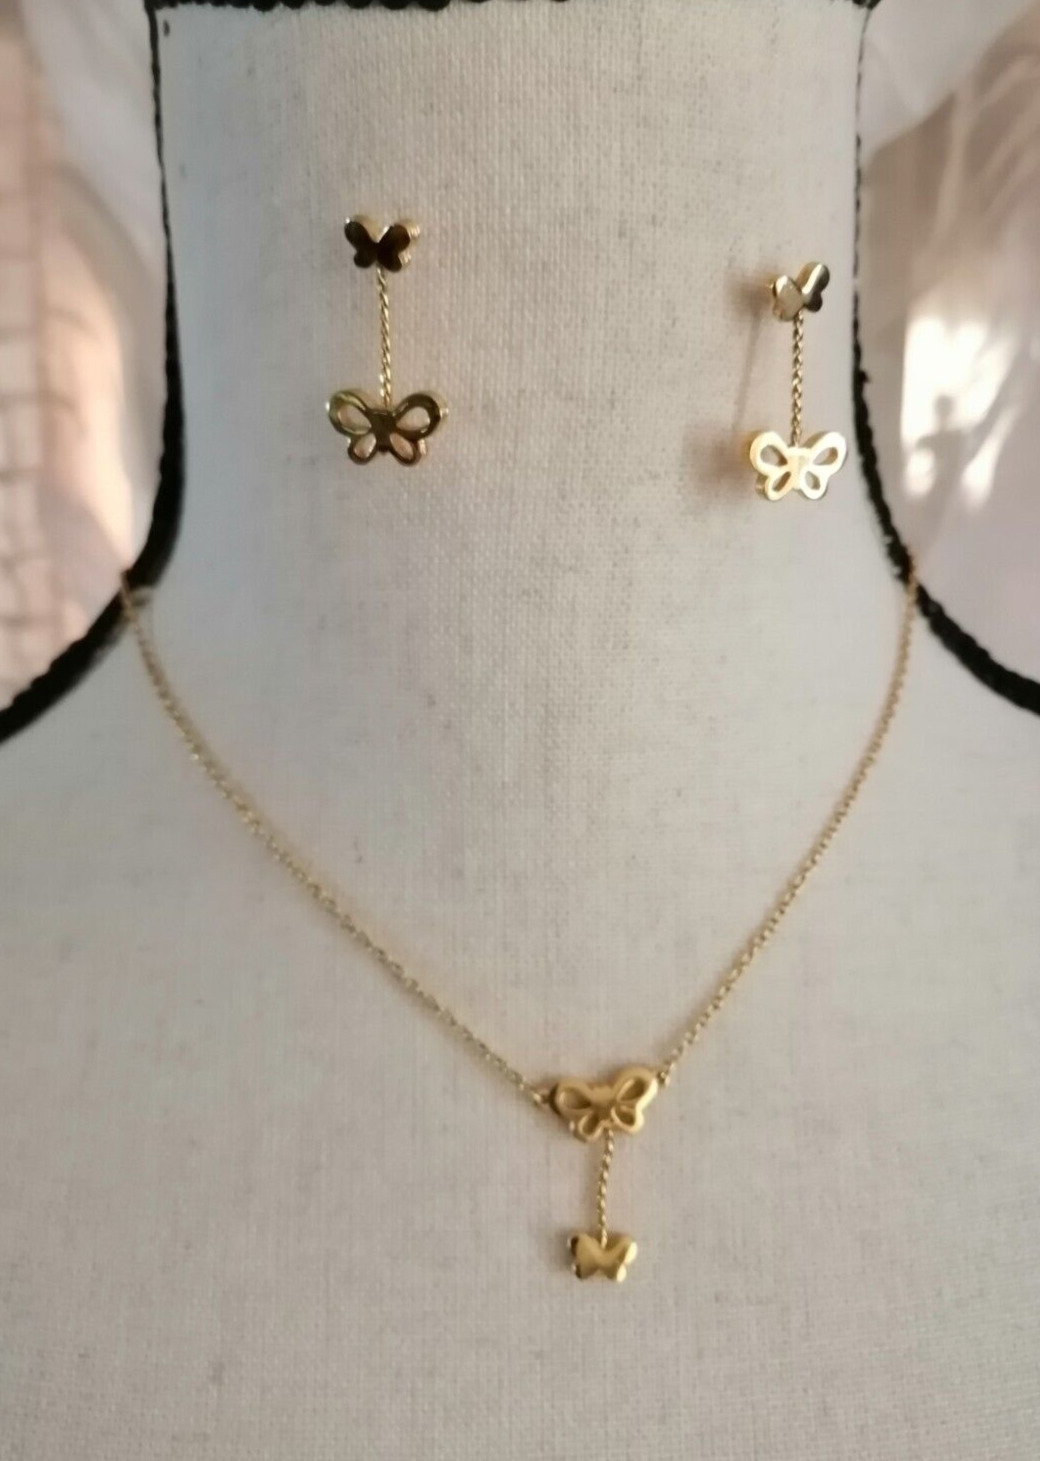 Vintage Crown TRIFARI Dangling Butterfly Pendant Necklace & Earrings Delicate